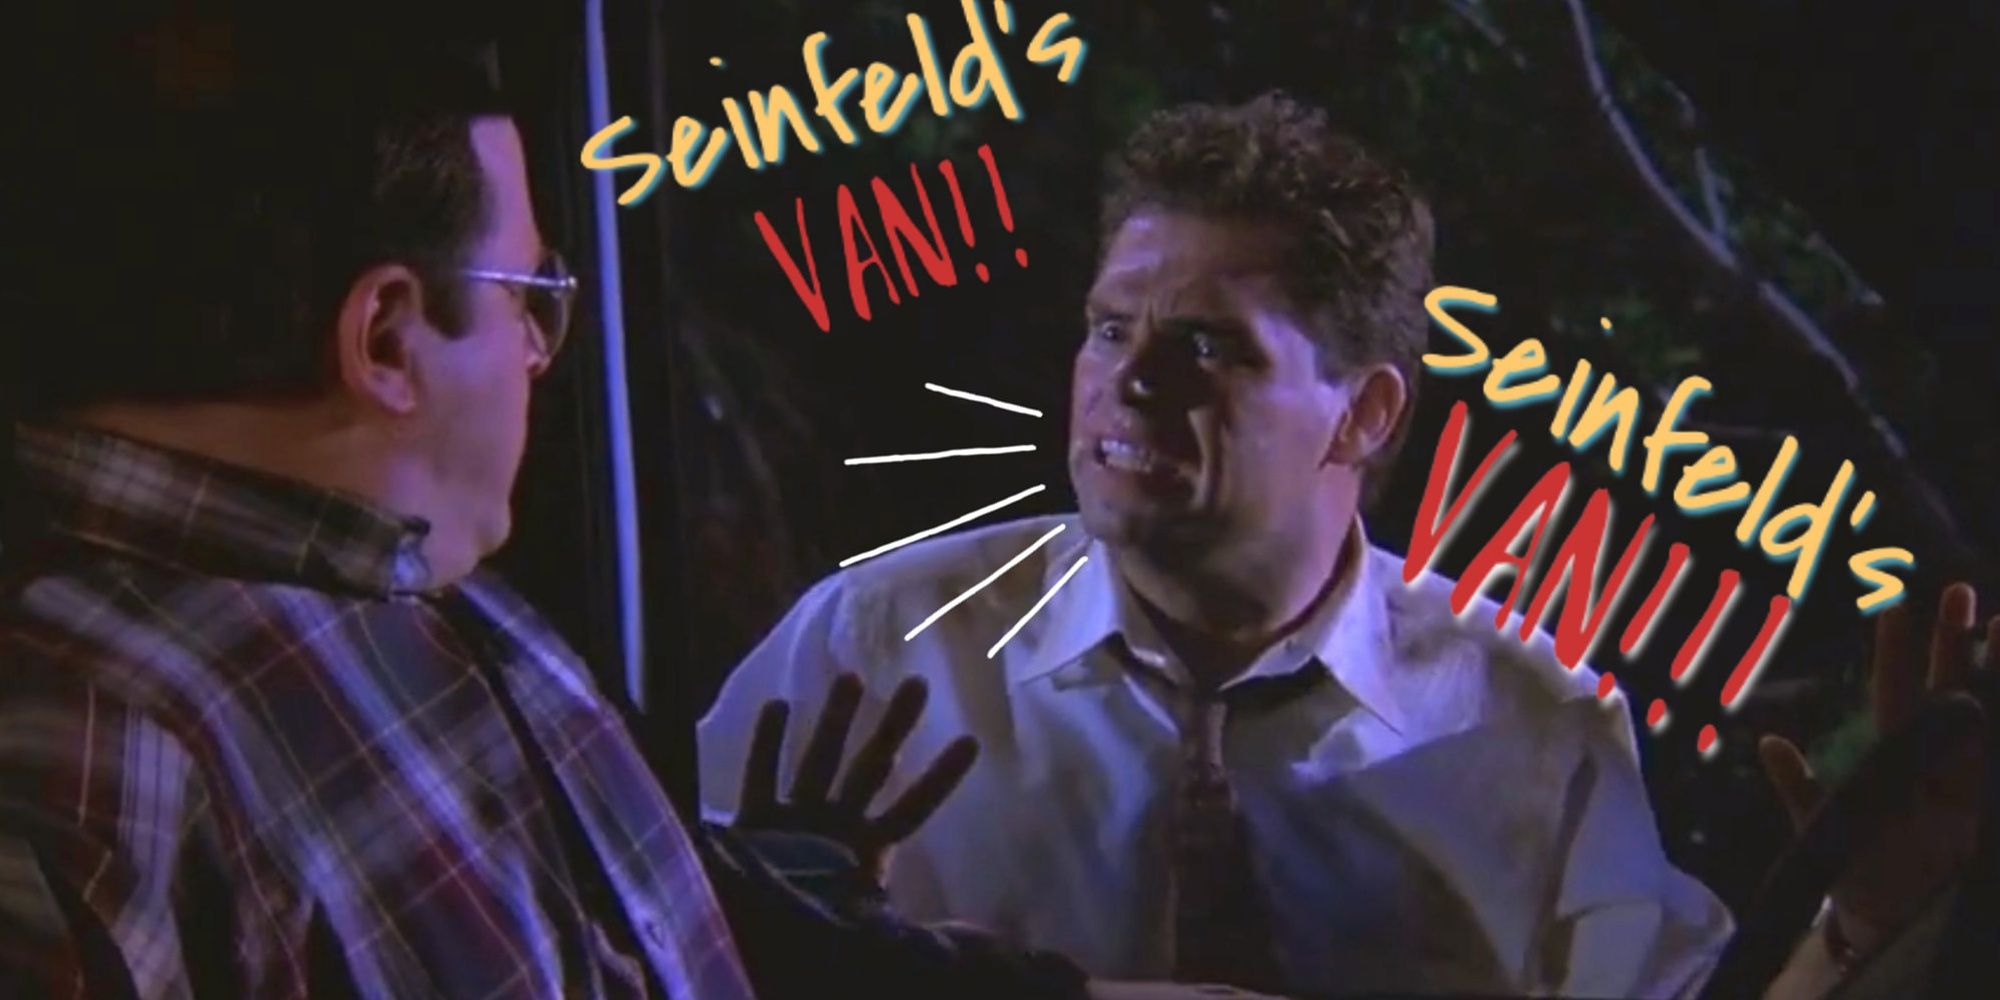 Frankie shouts 'Seinfeld's Van' while Kramer sits inside the van in a still from Seinfeld